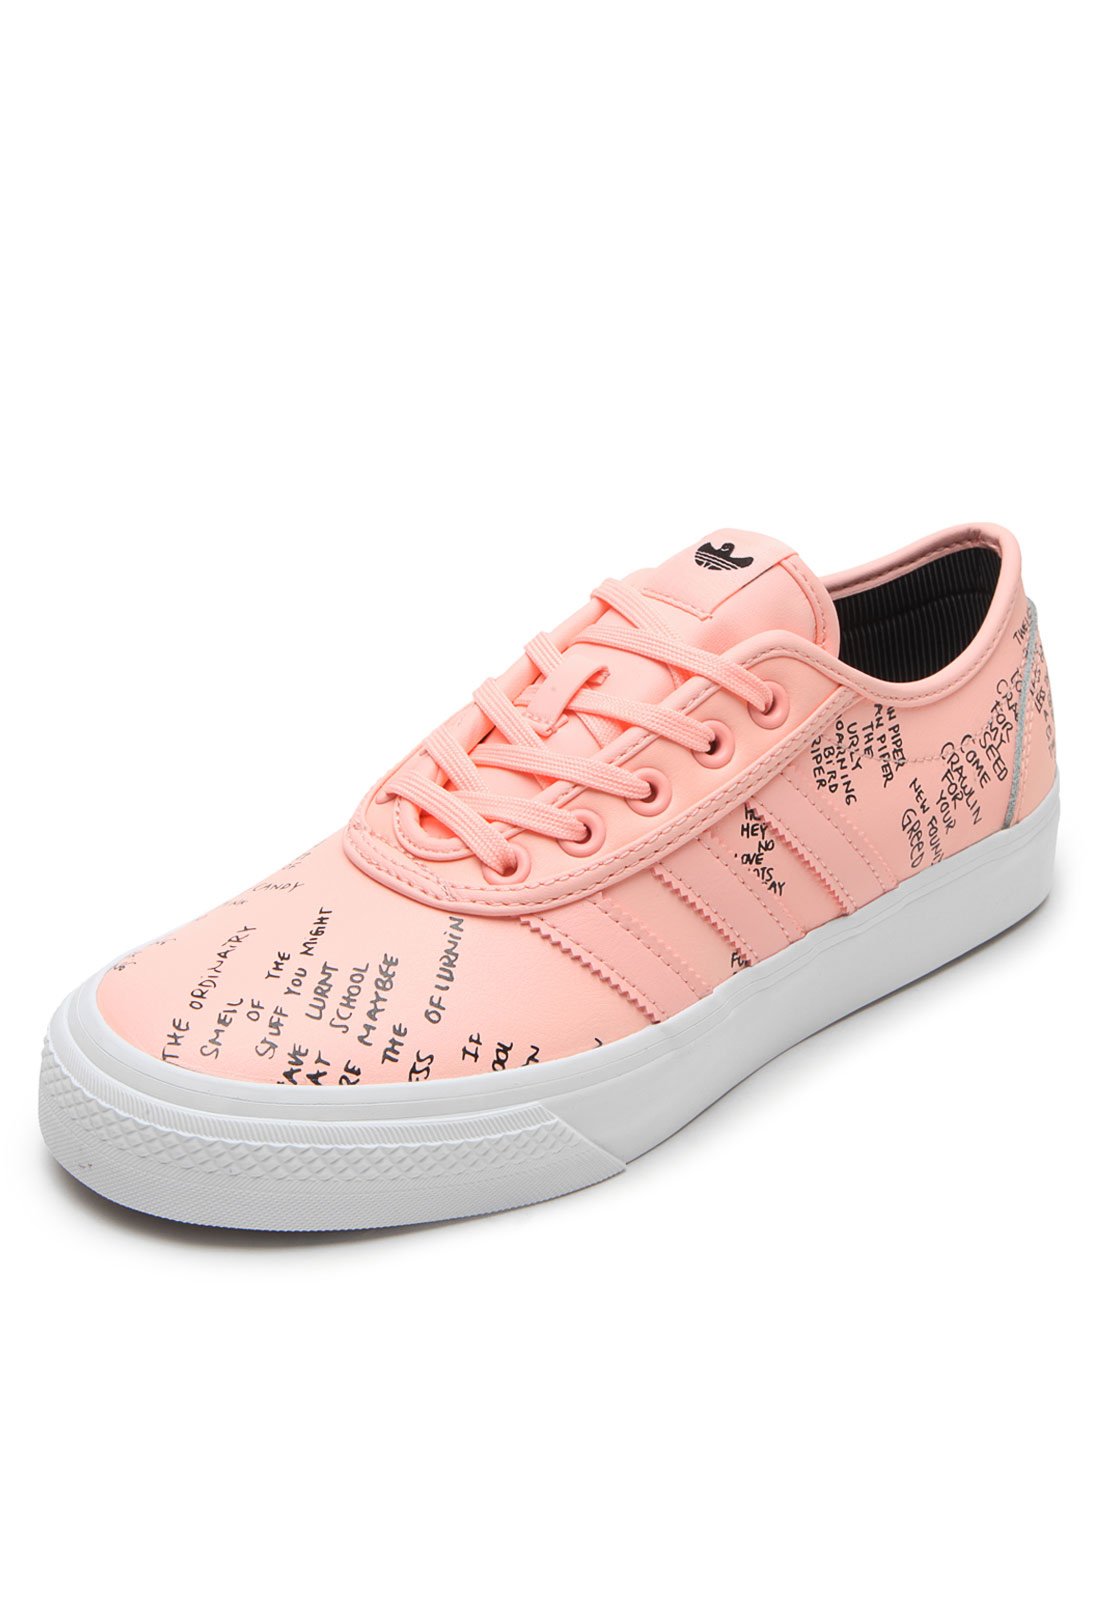 adidas skateboarding rosa